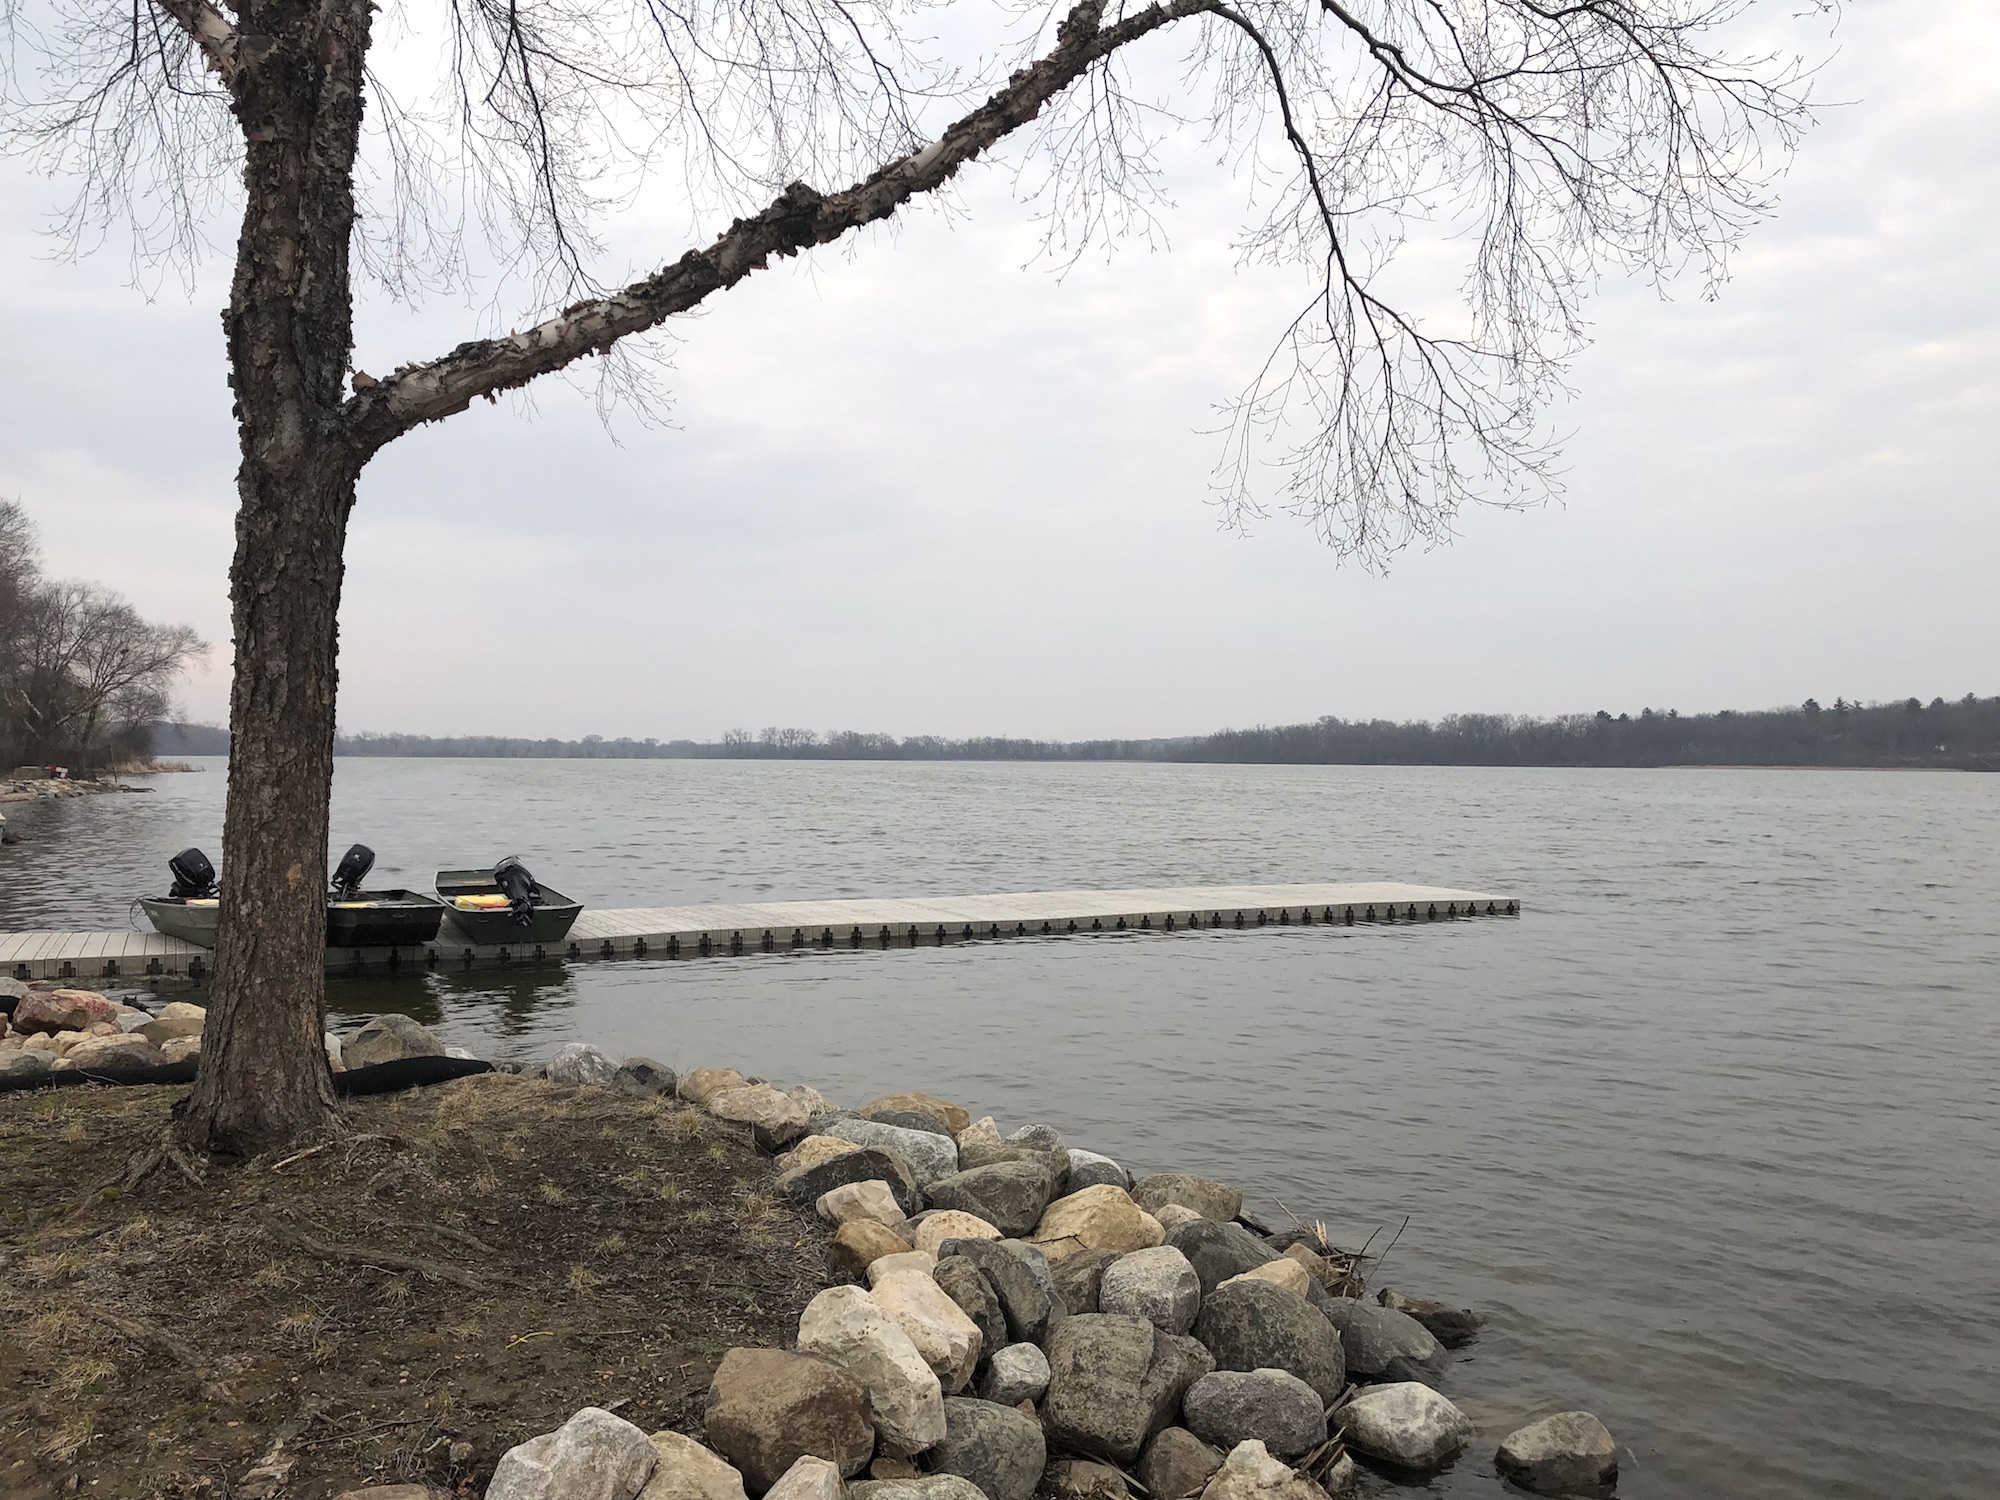 Lake Wingra on April 17, 2019.